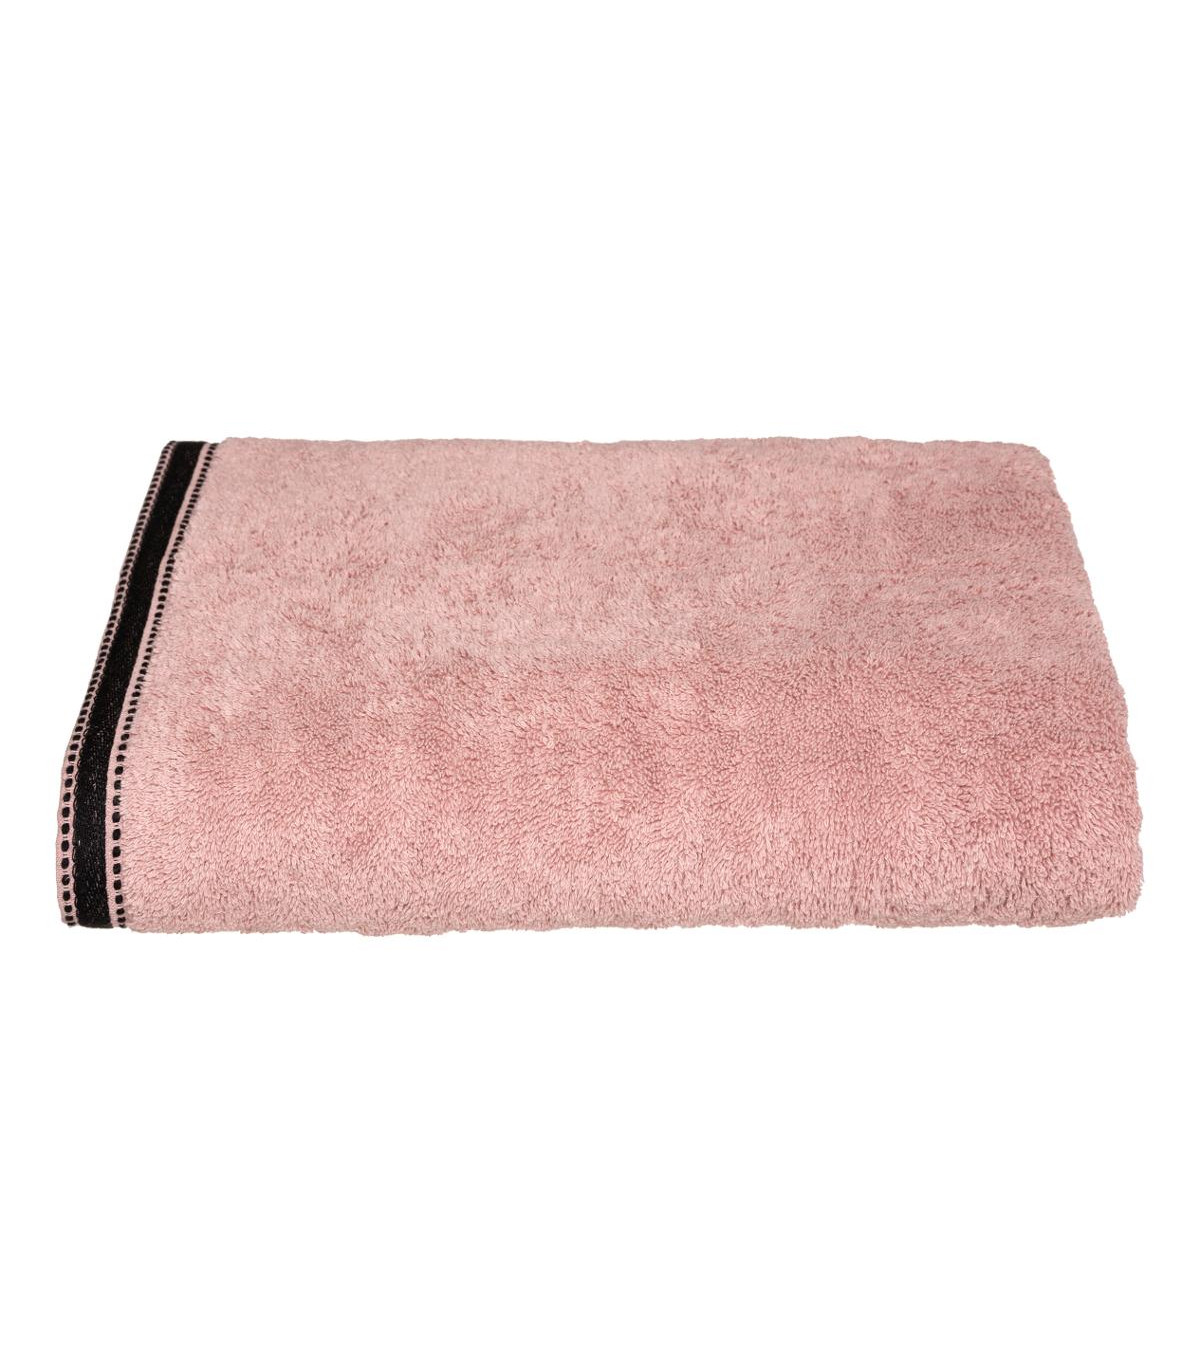 drap-de-bain-joia-rose-tissu-eponge-100-x-150-cm